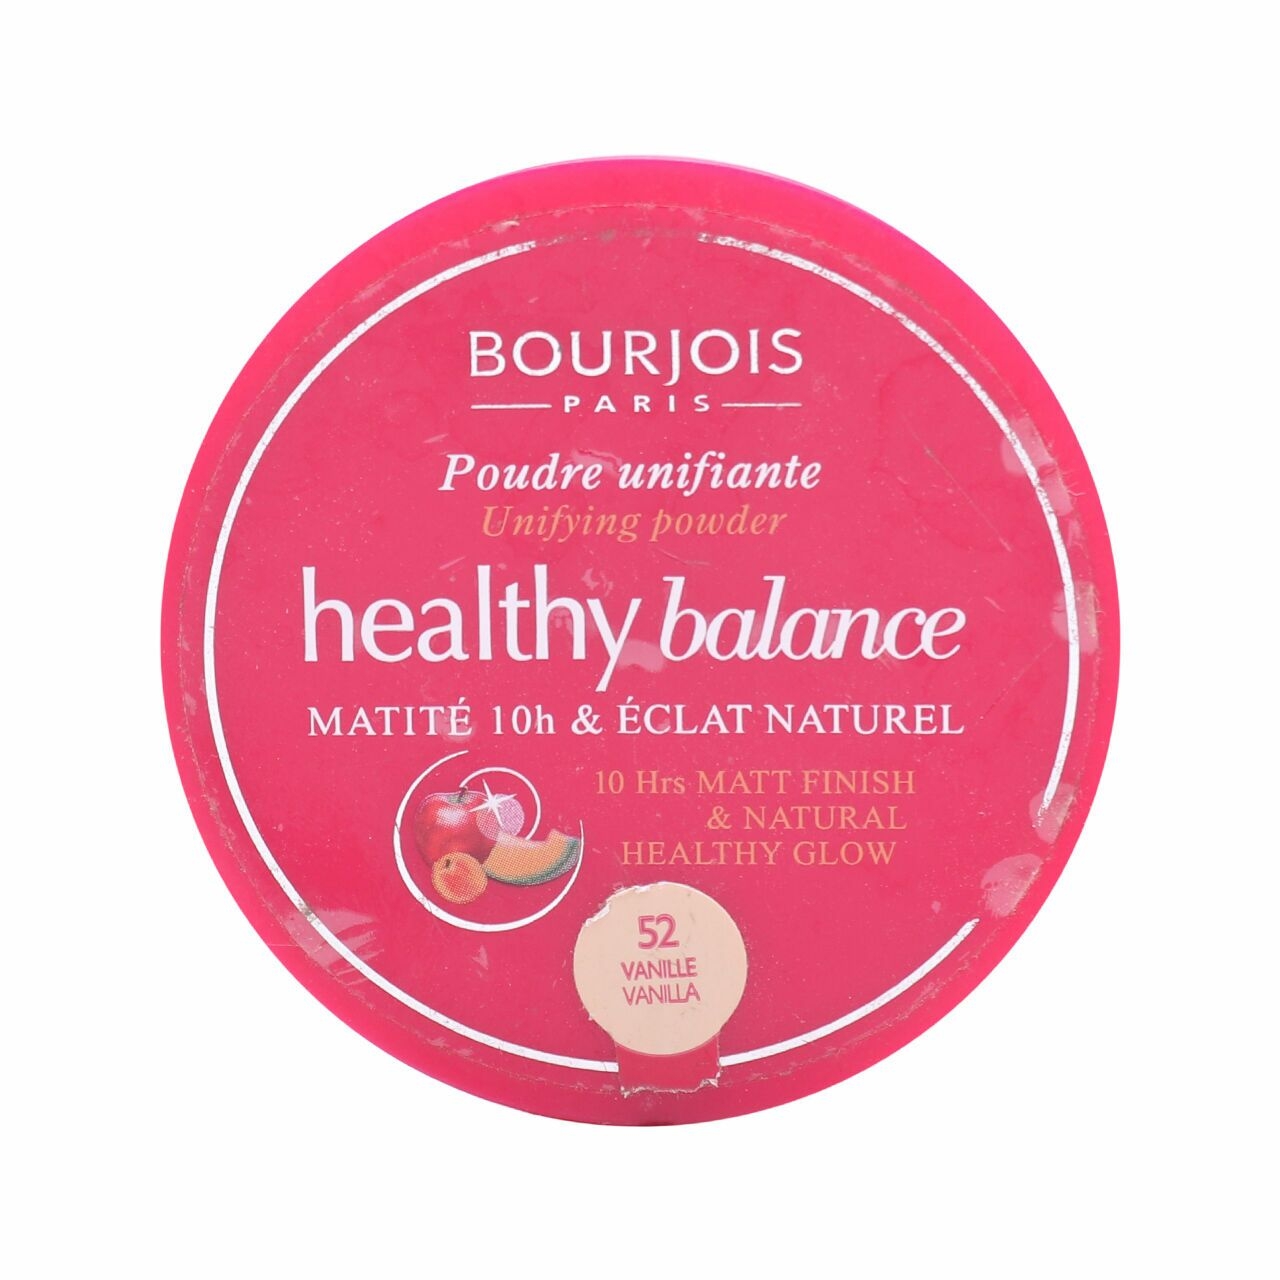 Bourjois Healthy Balance Matte Finish & Natural Healthy Glow 52 Vanilla Powder Faces